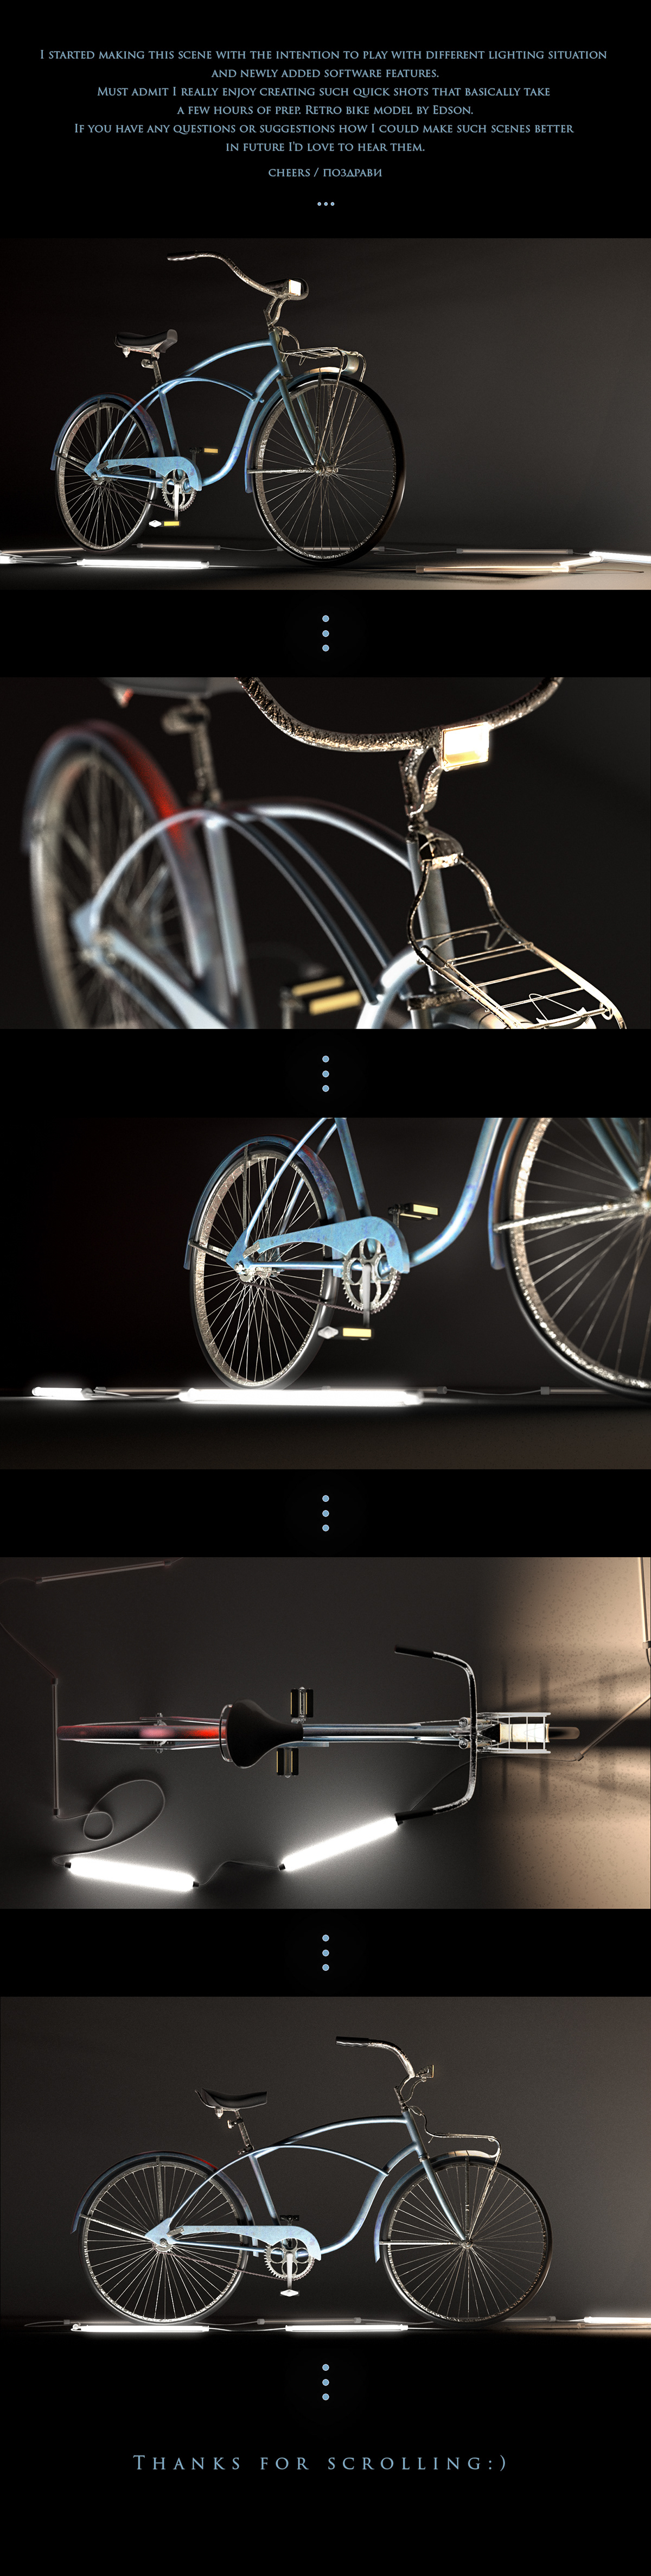 Bike product shot studio lighting